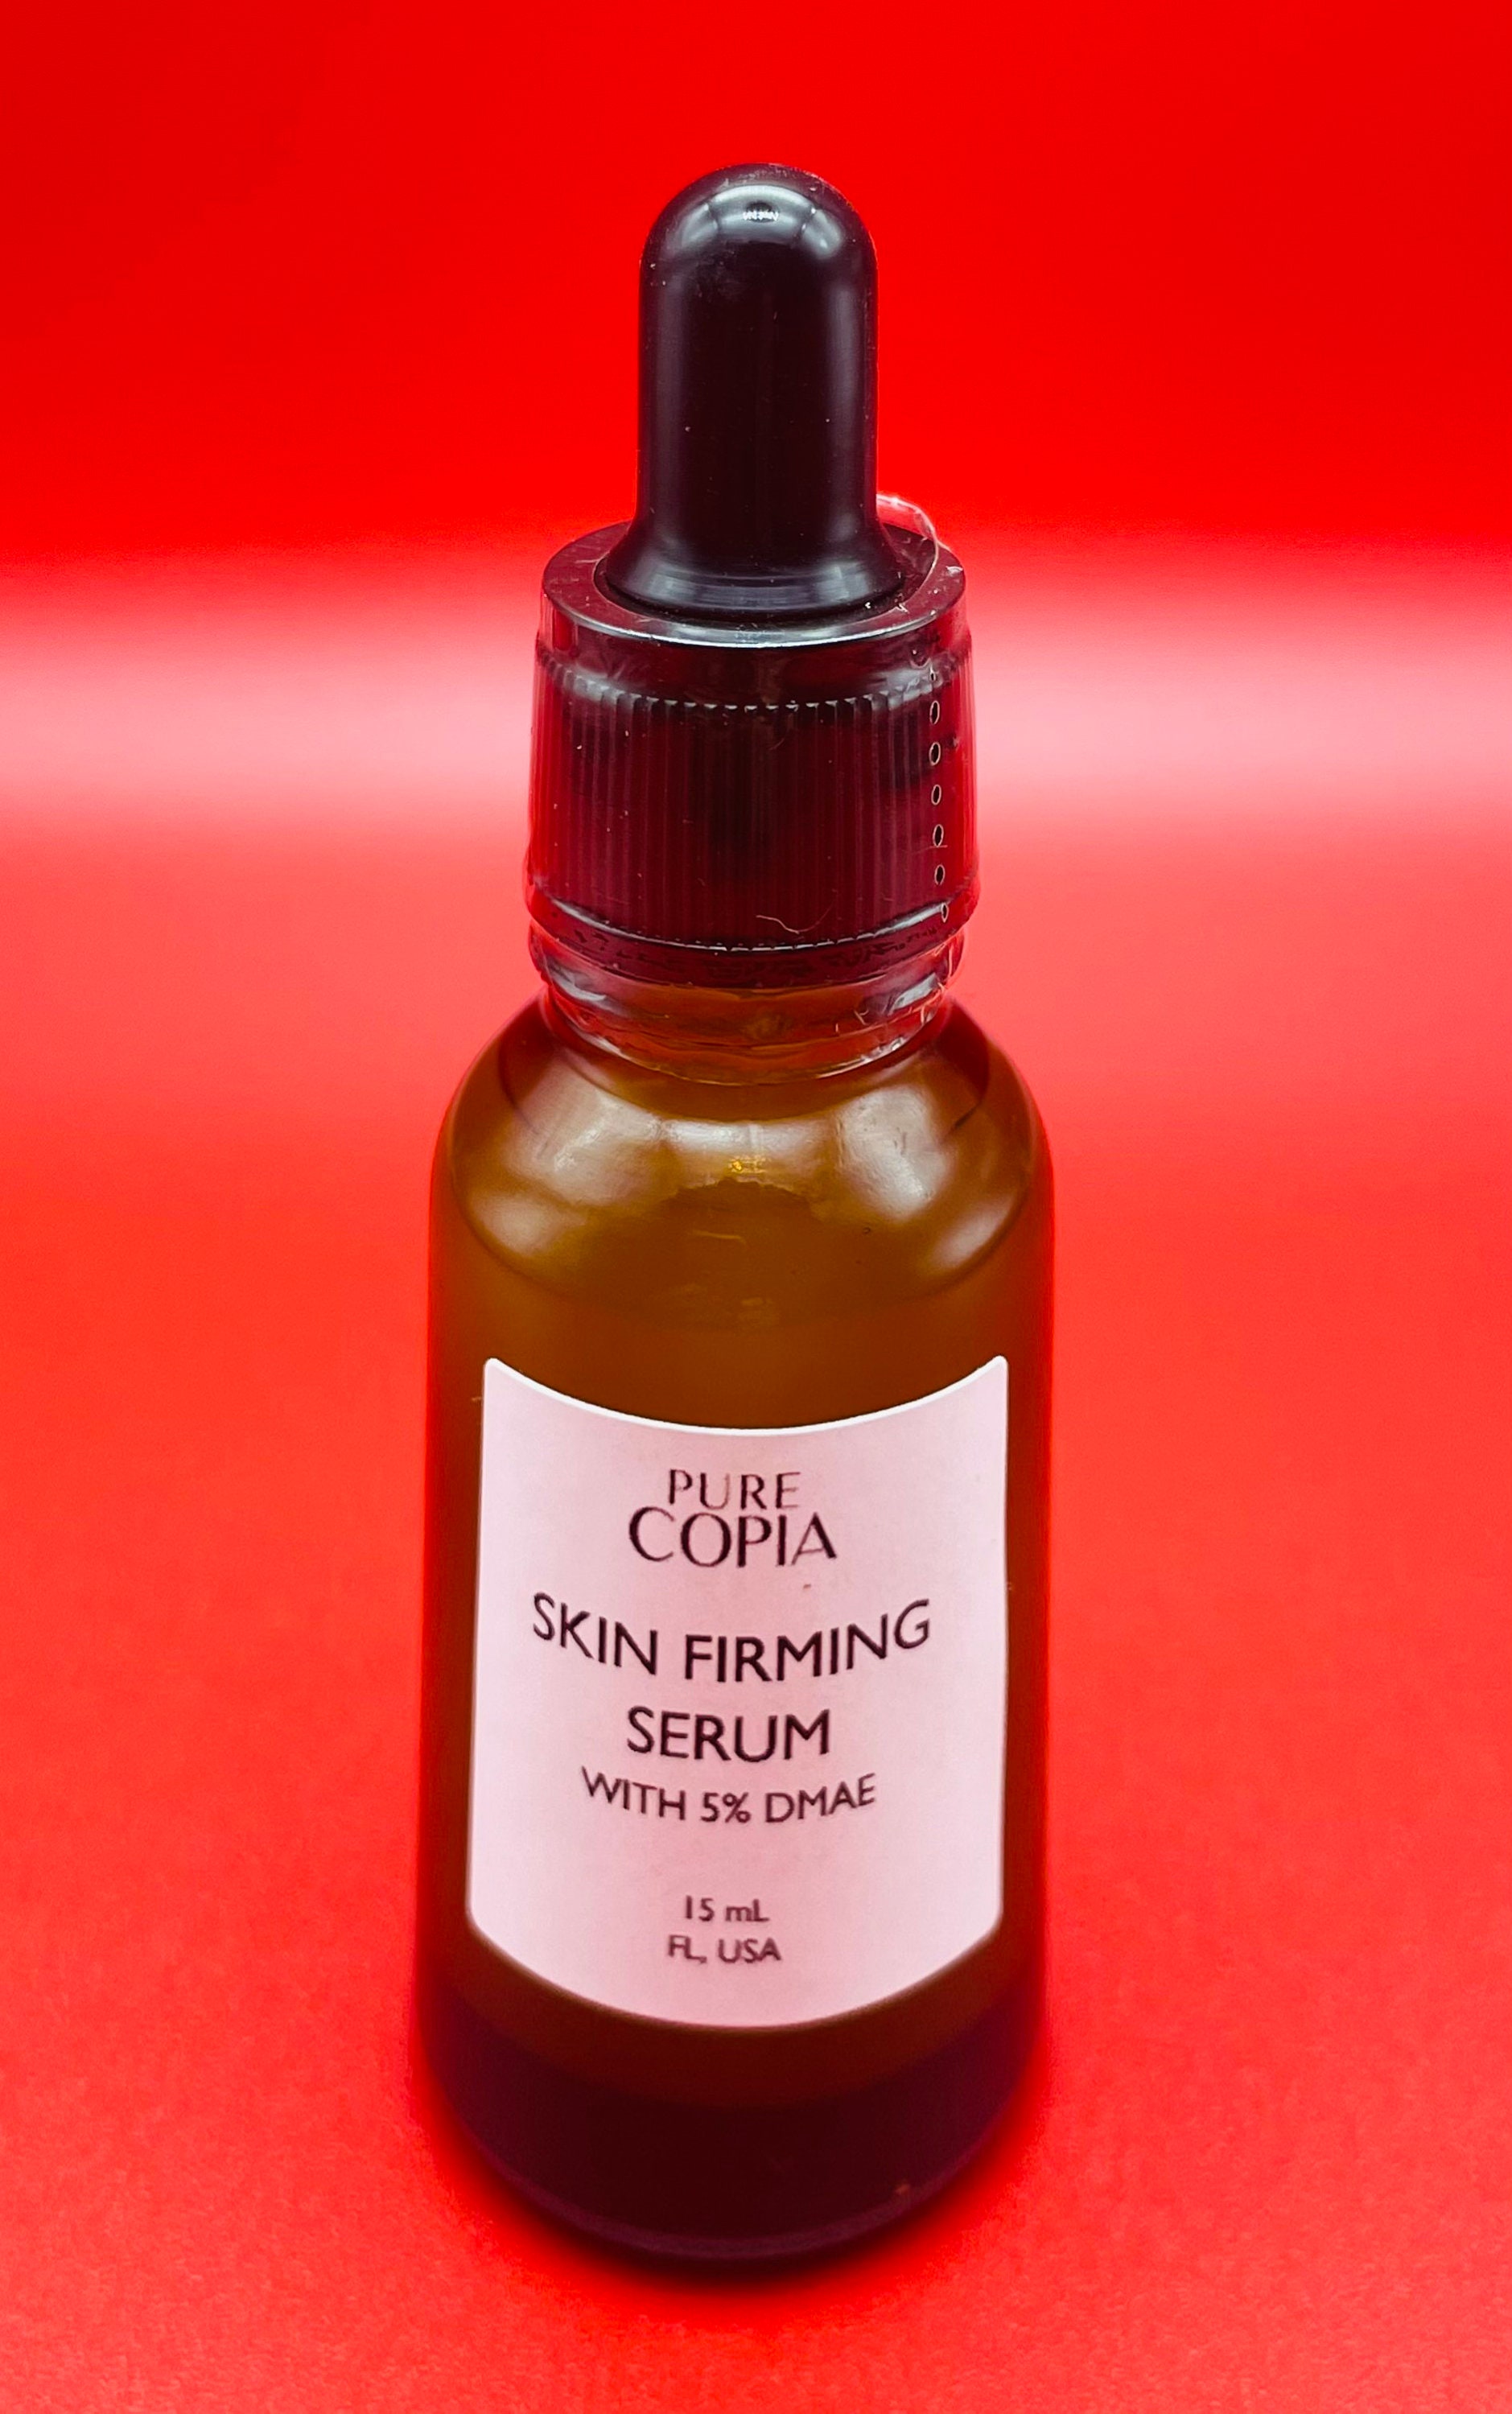 Skin firming serum DMAE 5%